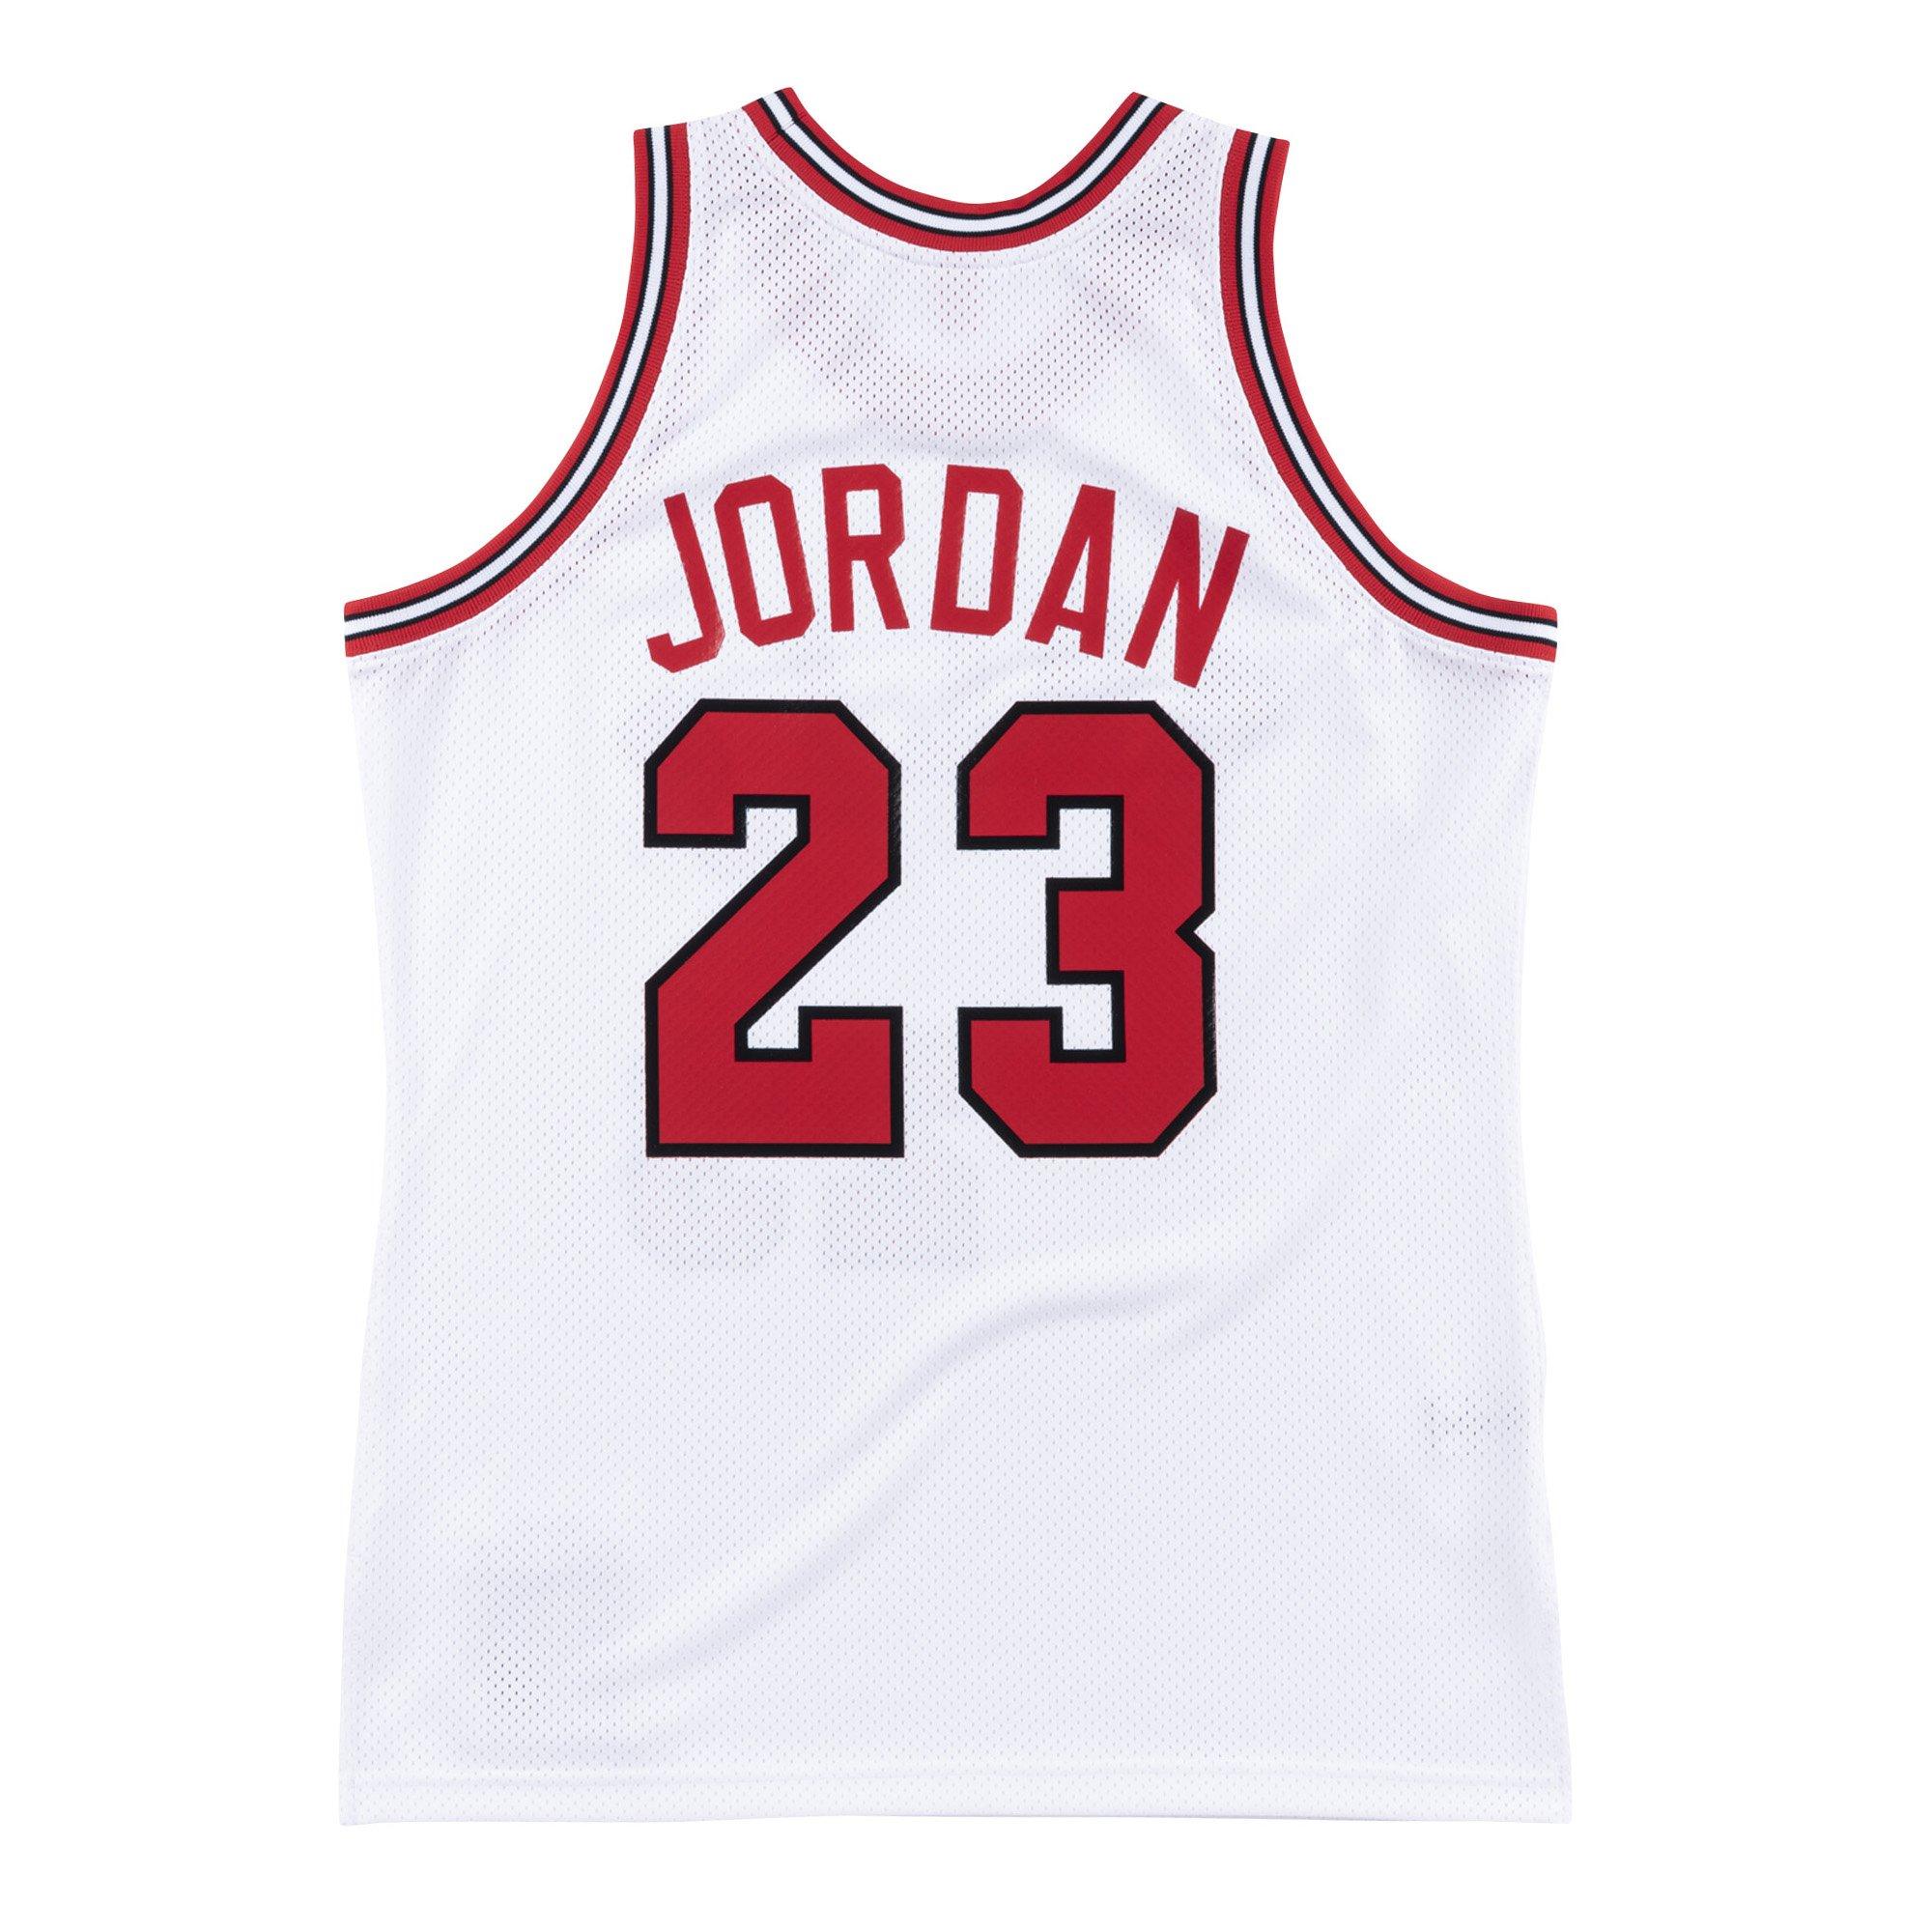 Vintage Gear: Nike Michael Jordan Bulls Rookie Jersey - Air